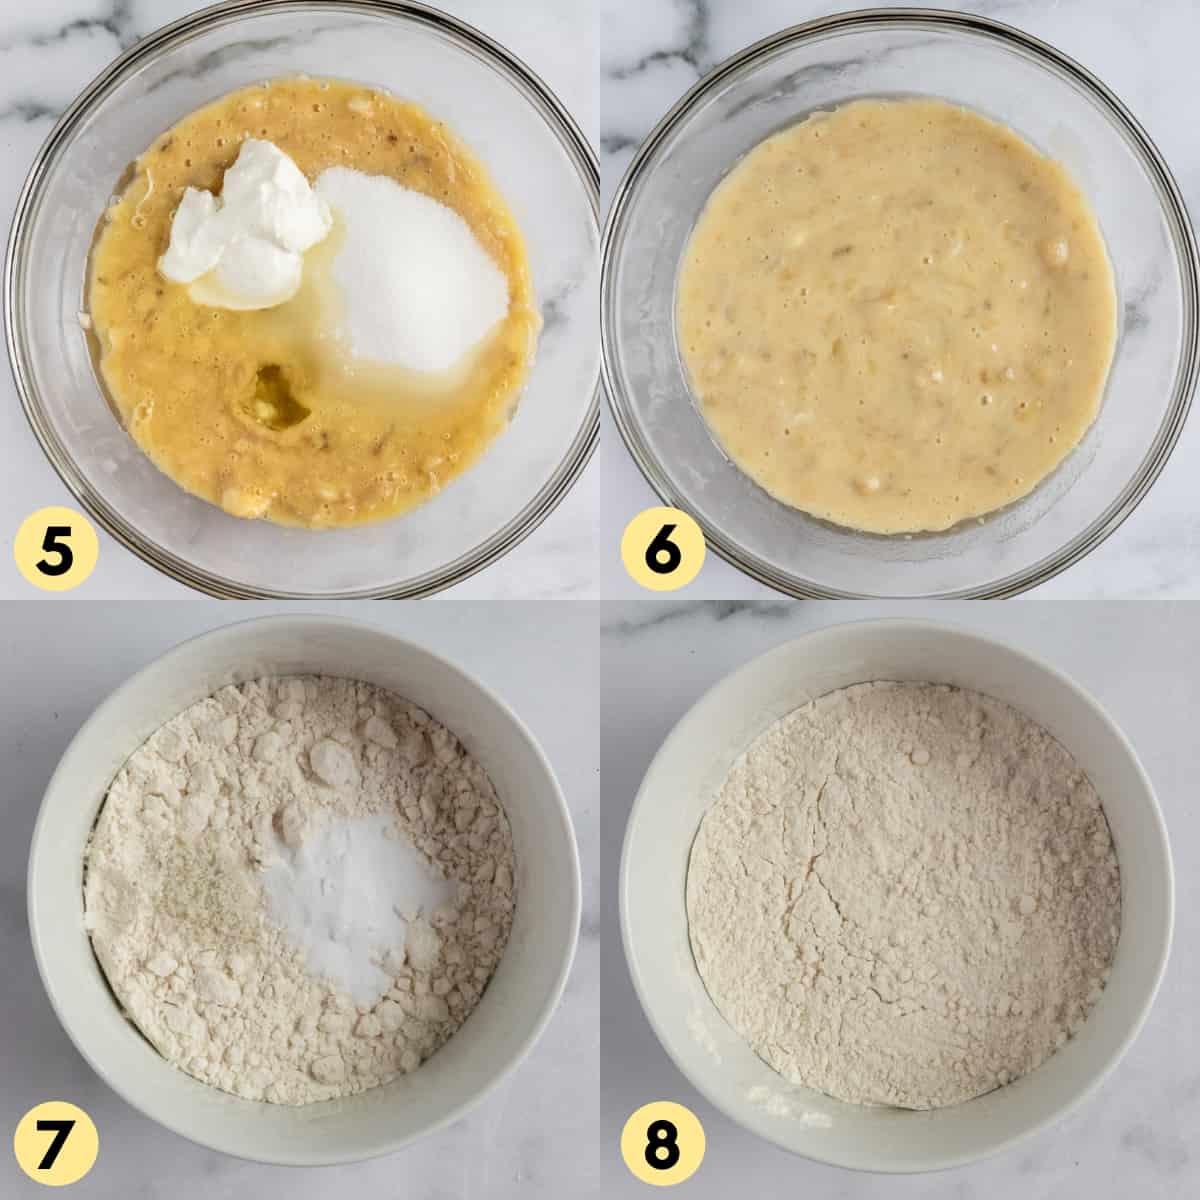 Process shots of recipe steps 5 through 8.